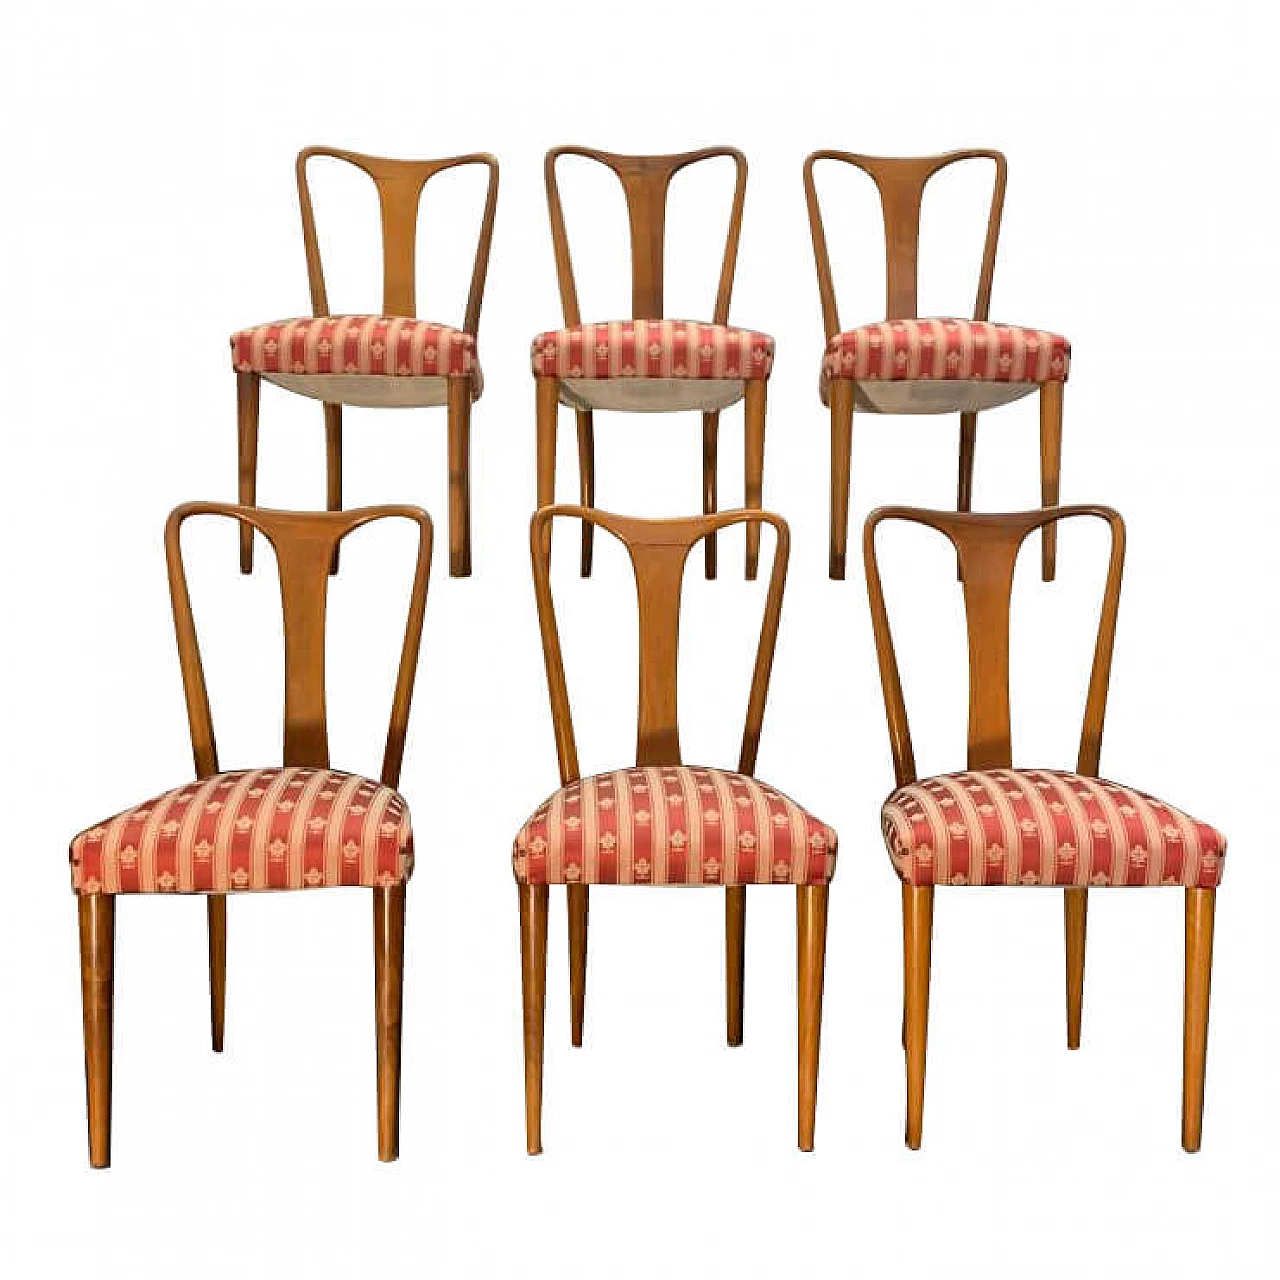 6 Guglielmo Ulrich chairs in cherry wood, 1939 1181179